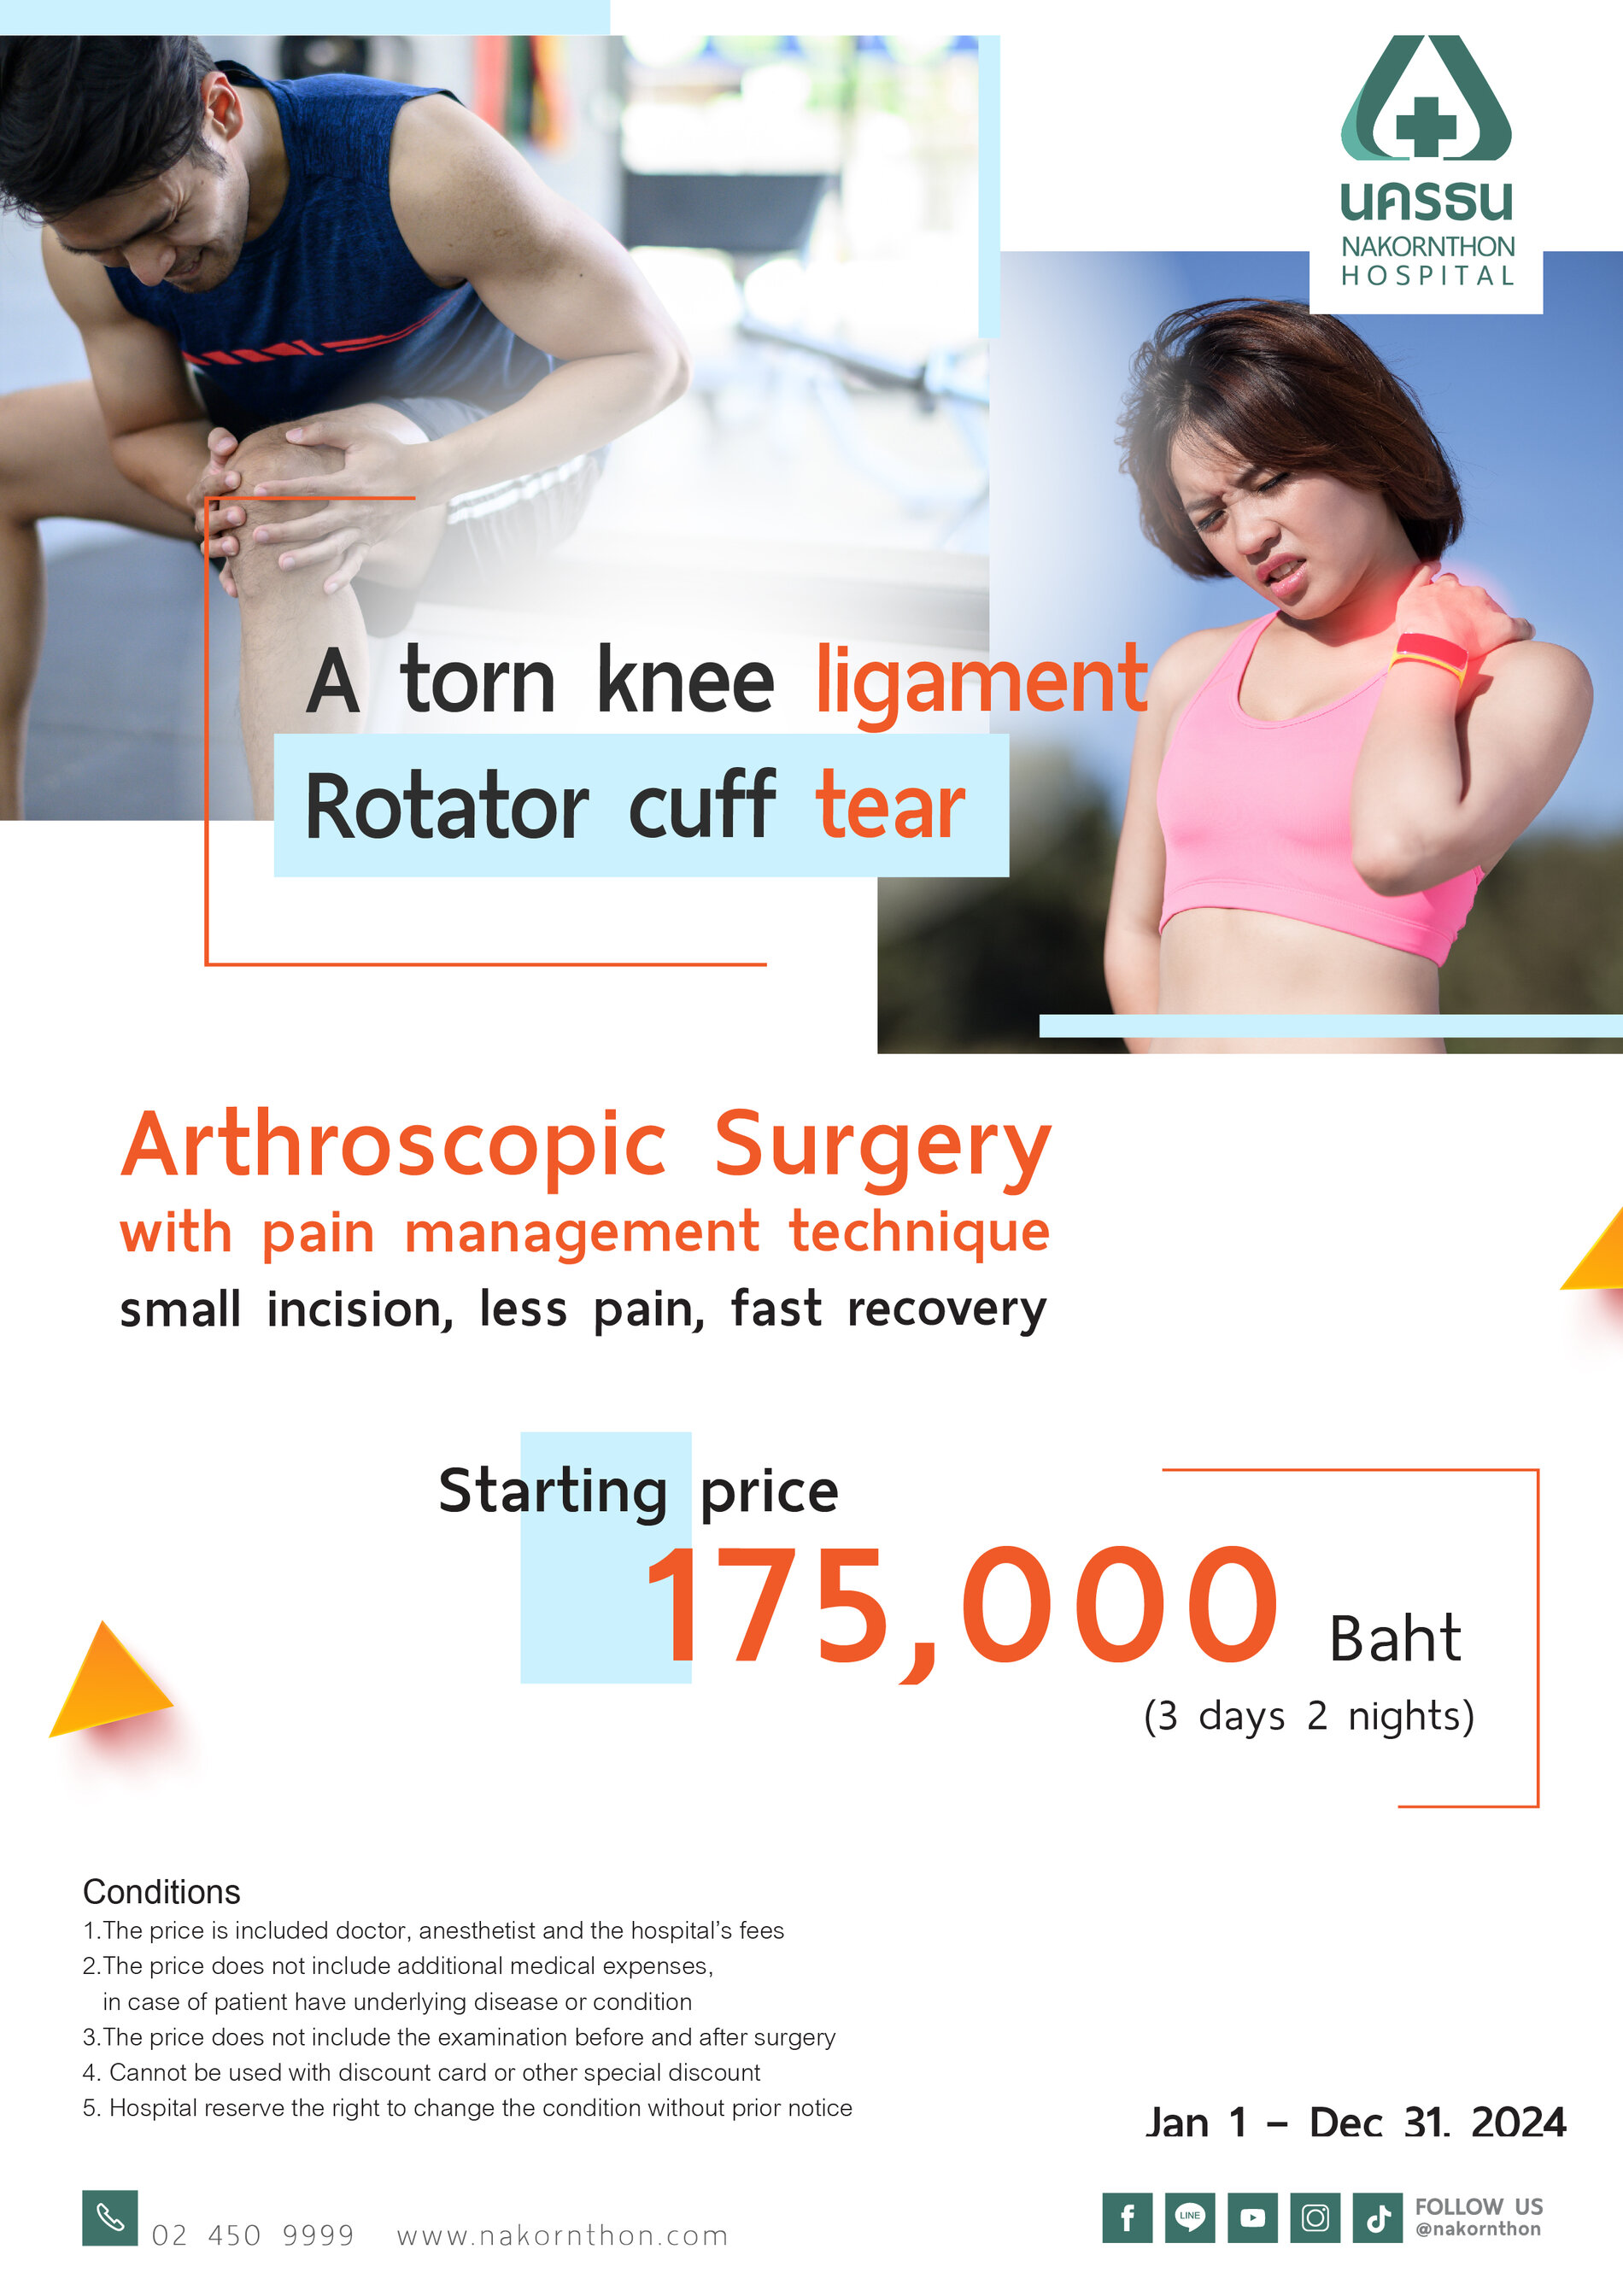 Arthroscopic Surgery with pain management technique